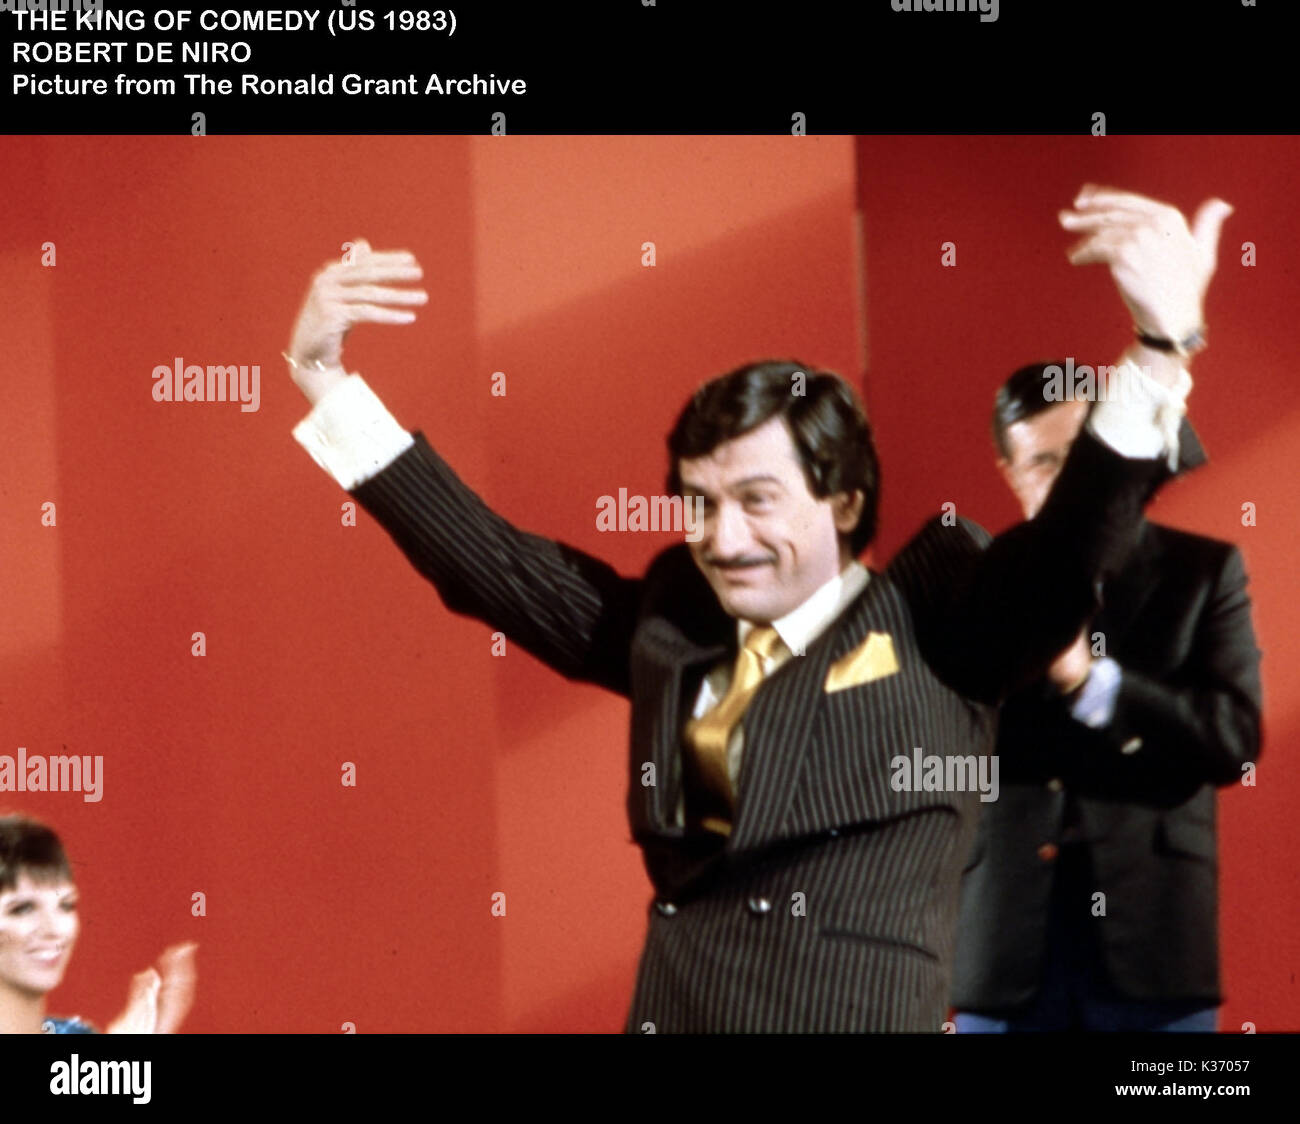 THE KING OF COMEDY ROBERT DE NIRO     Date: 1983 Stock Photo